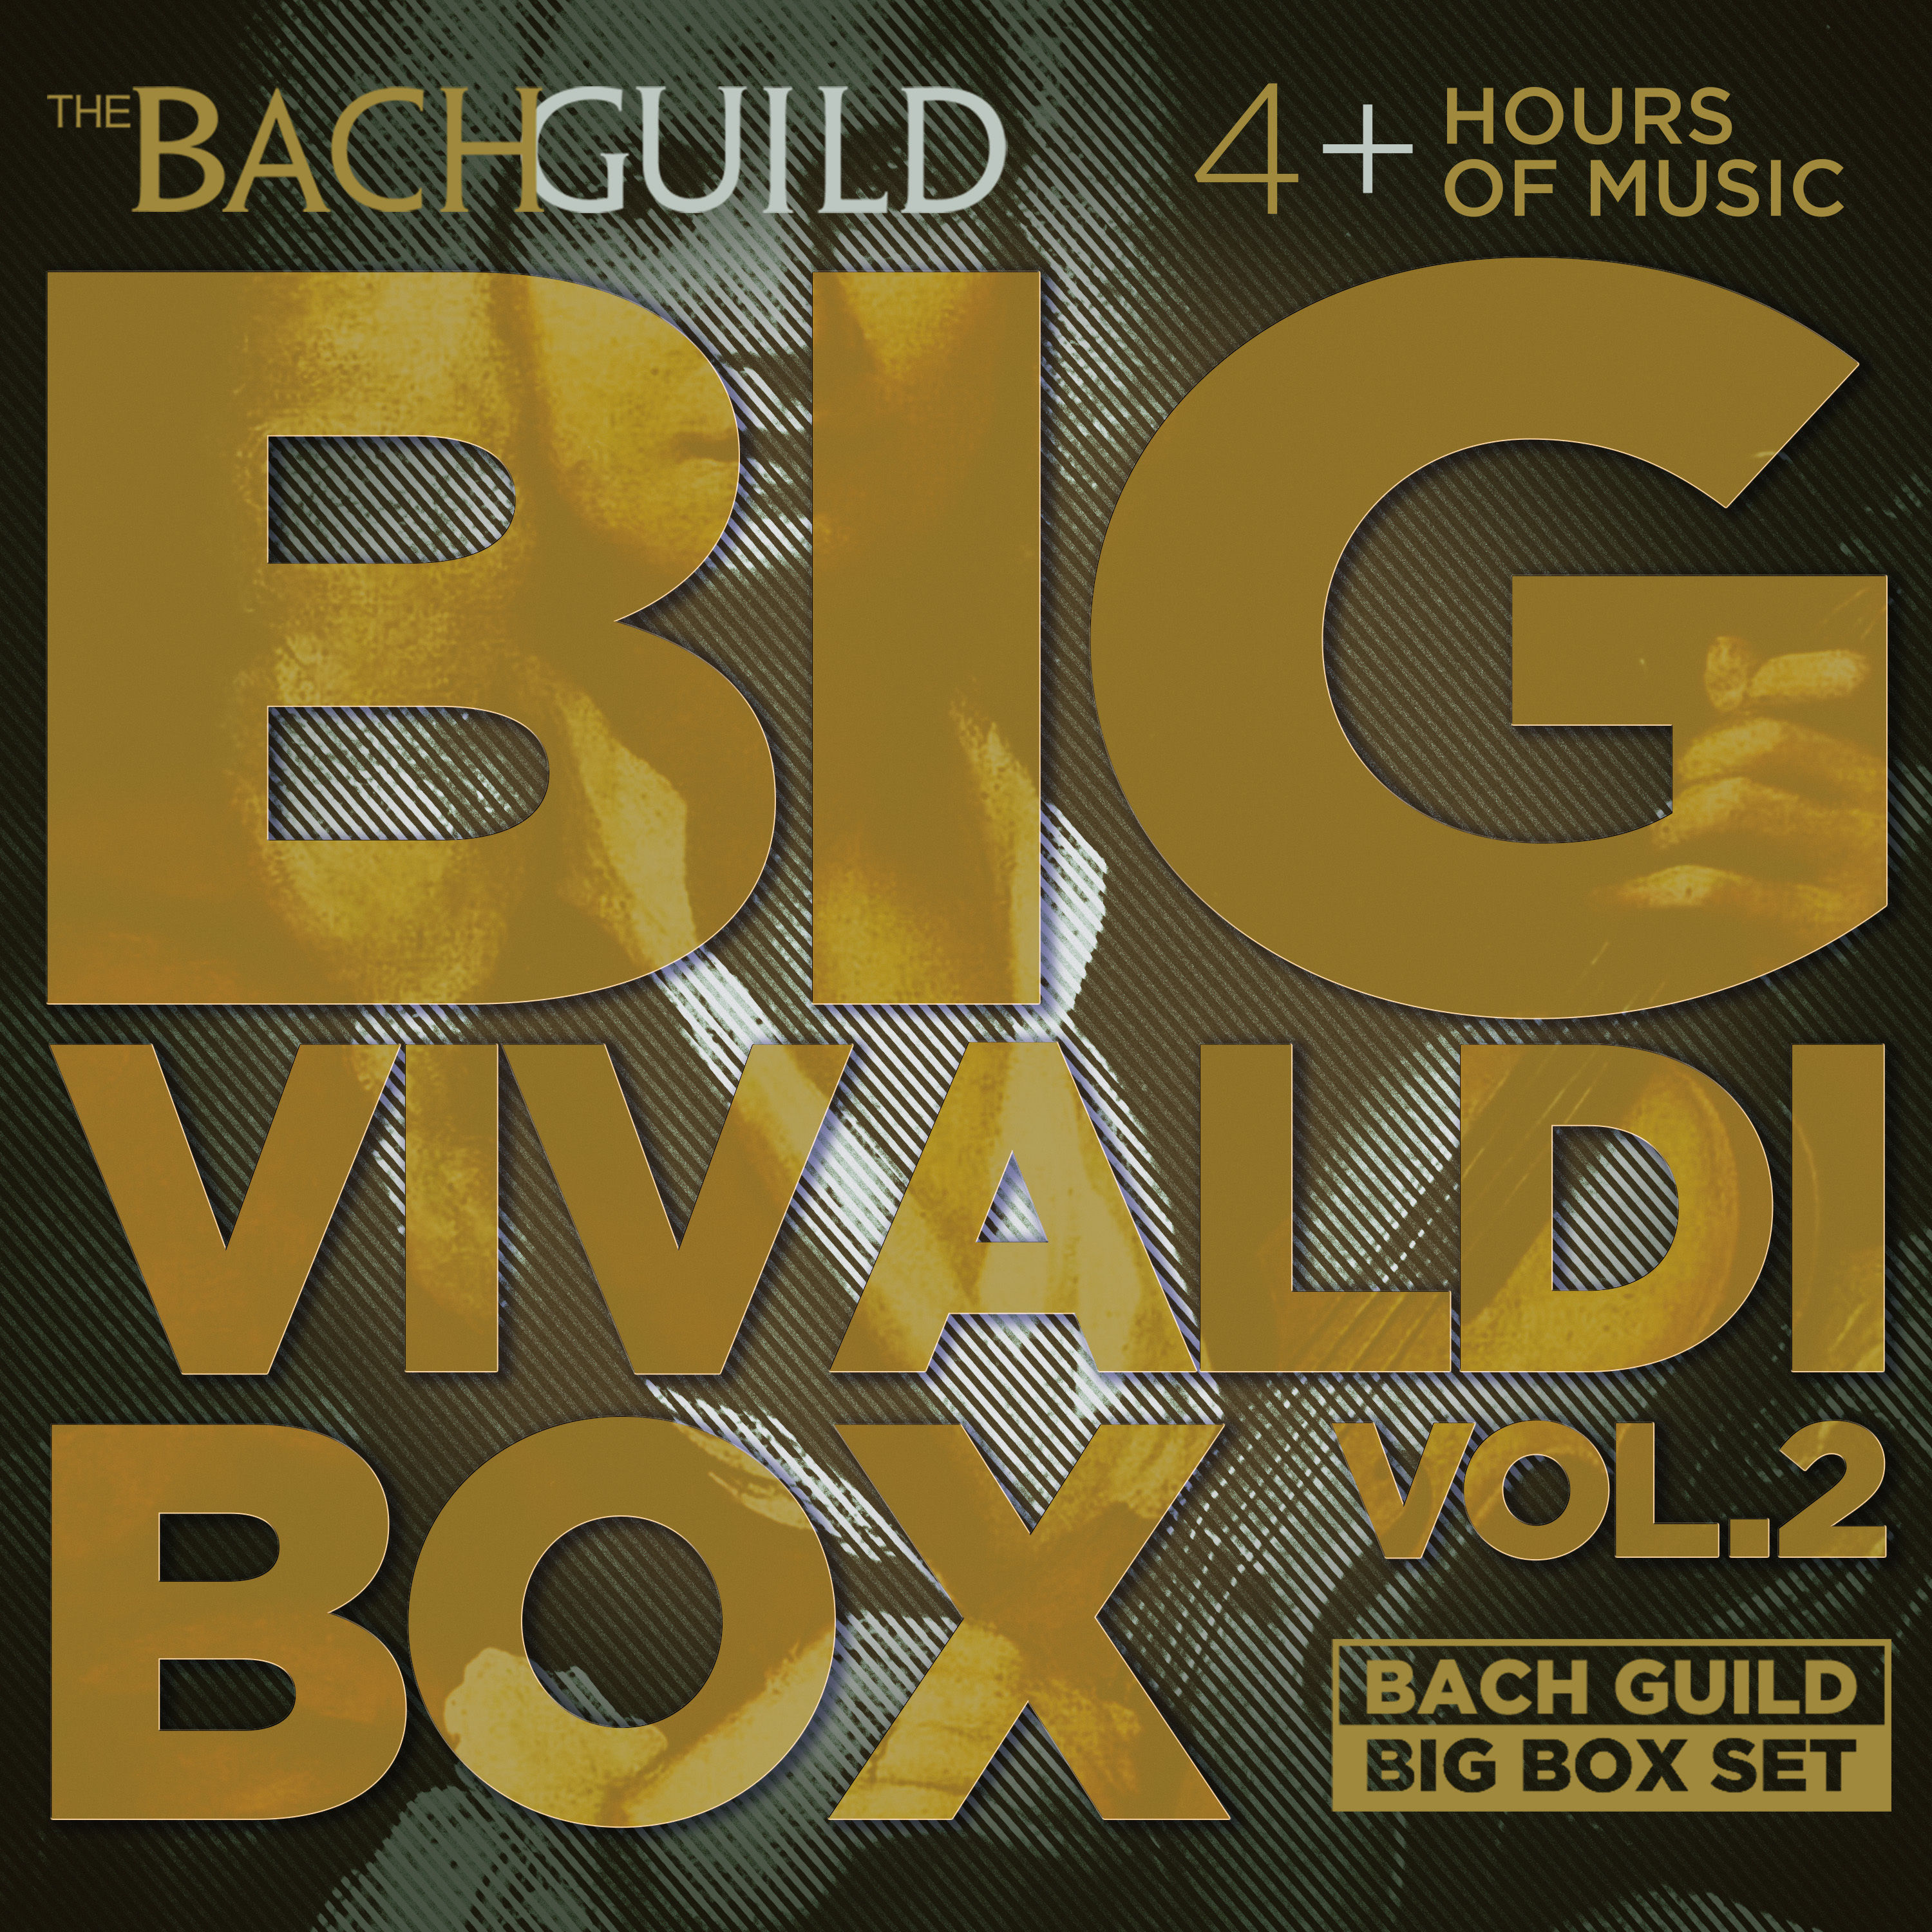 Big Vivaldi Box, Volume 2 - Bach Guild